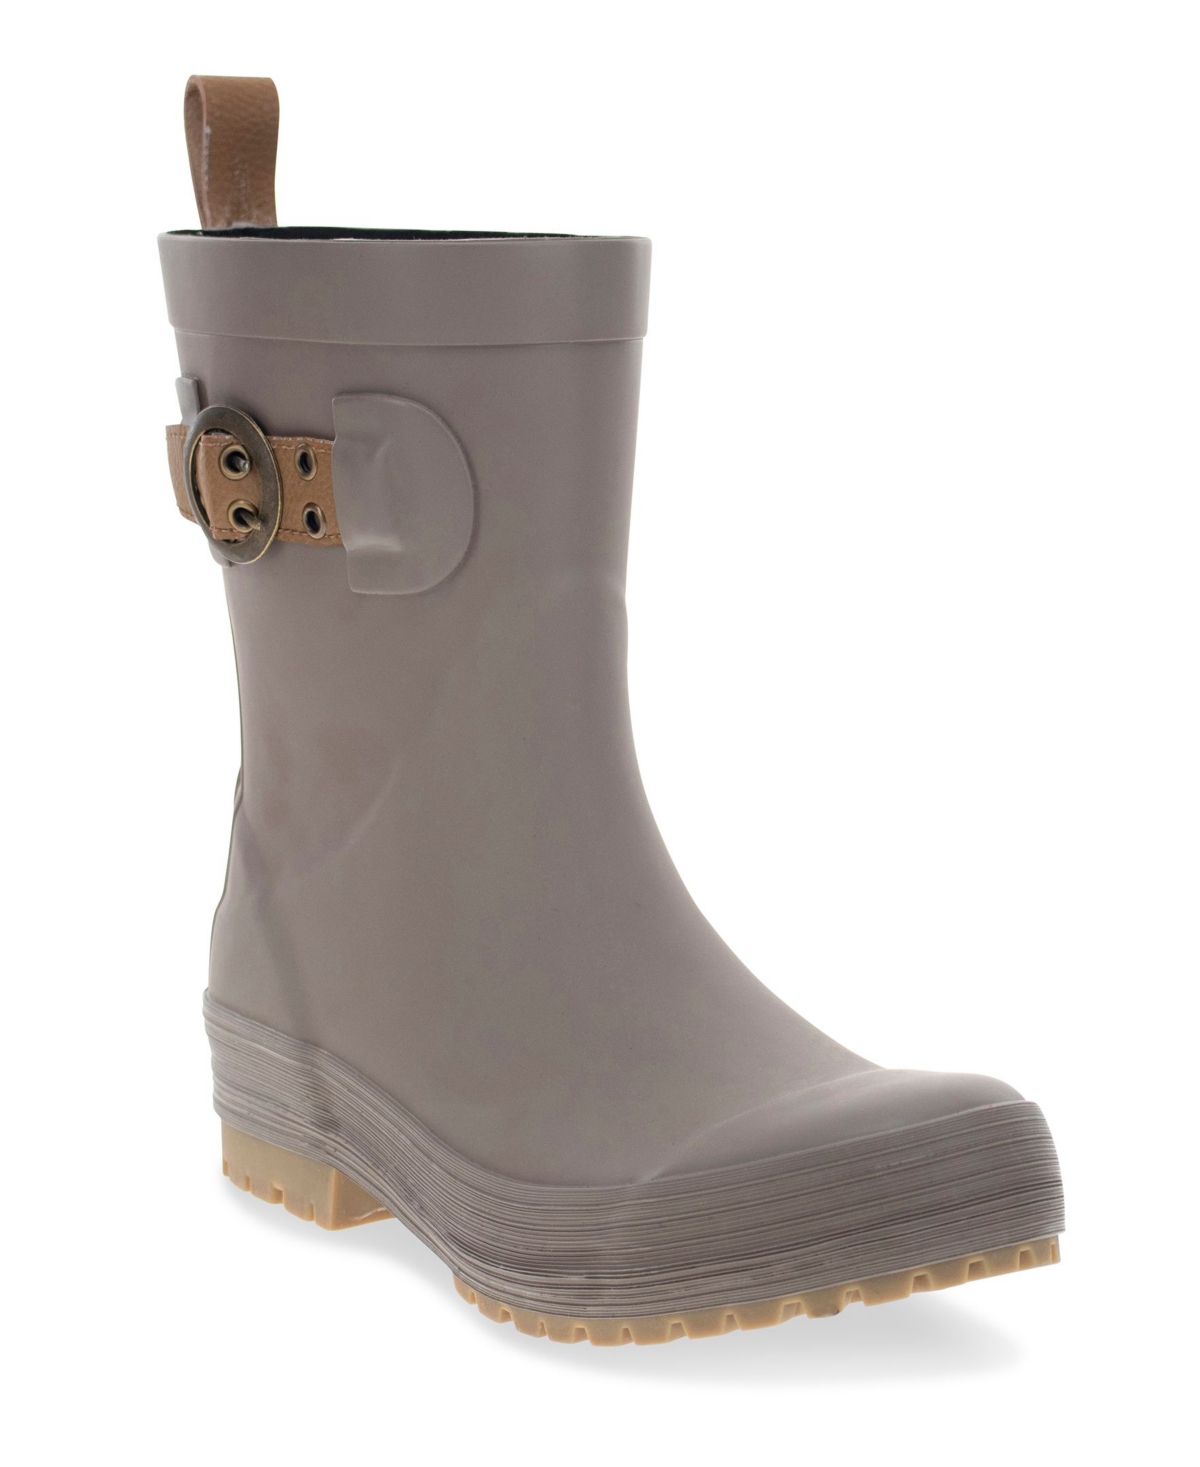 Chooka Women's Everyday Waterproof Mid Calf Rain Boots Women's Shoes